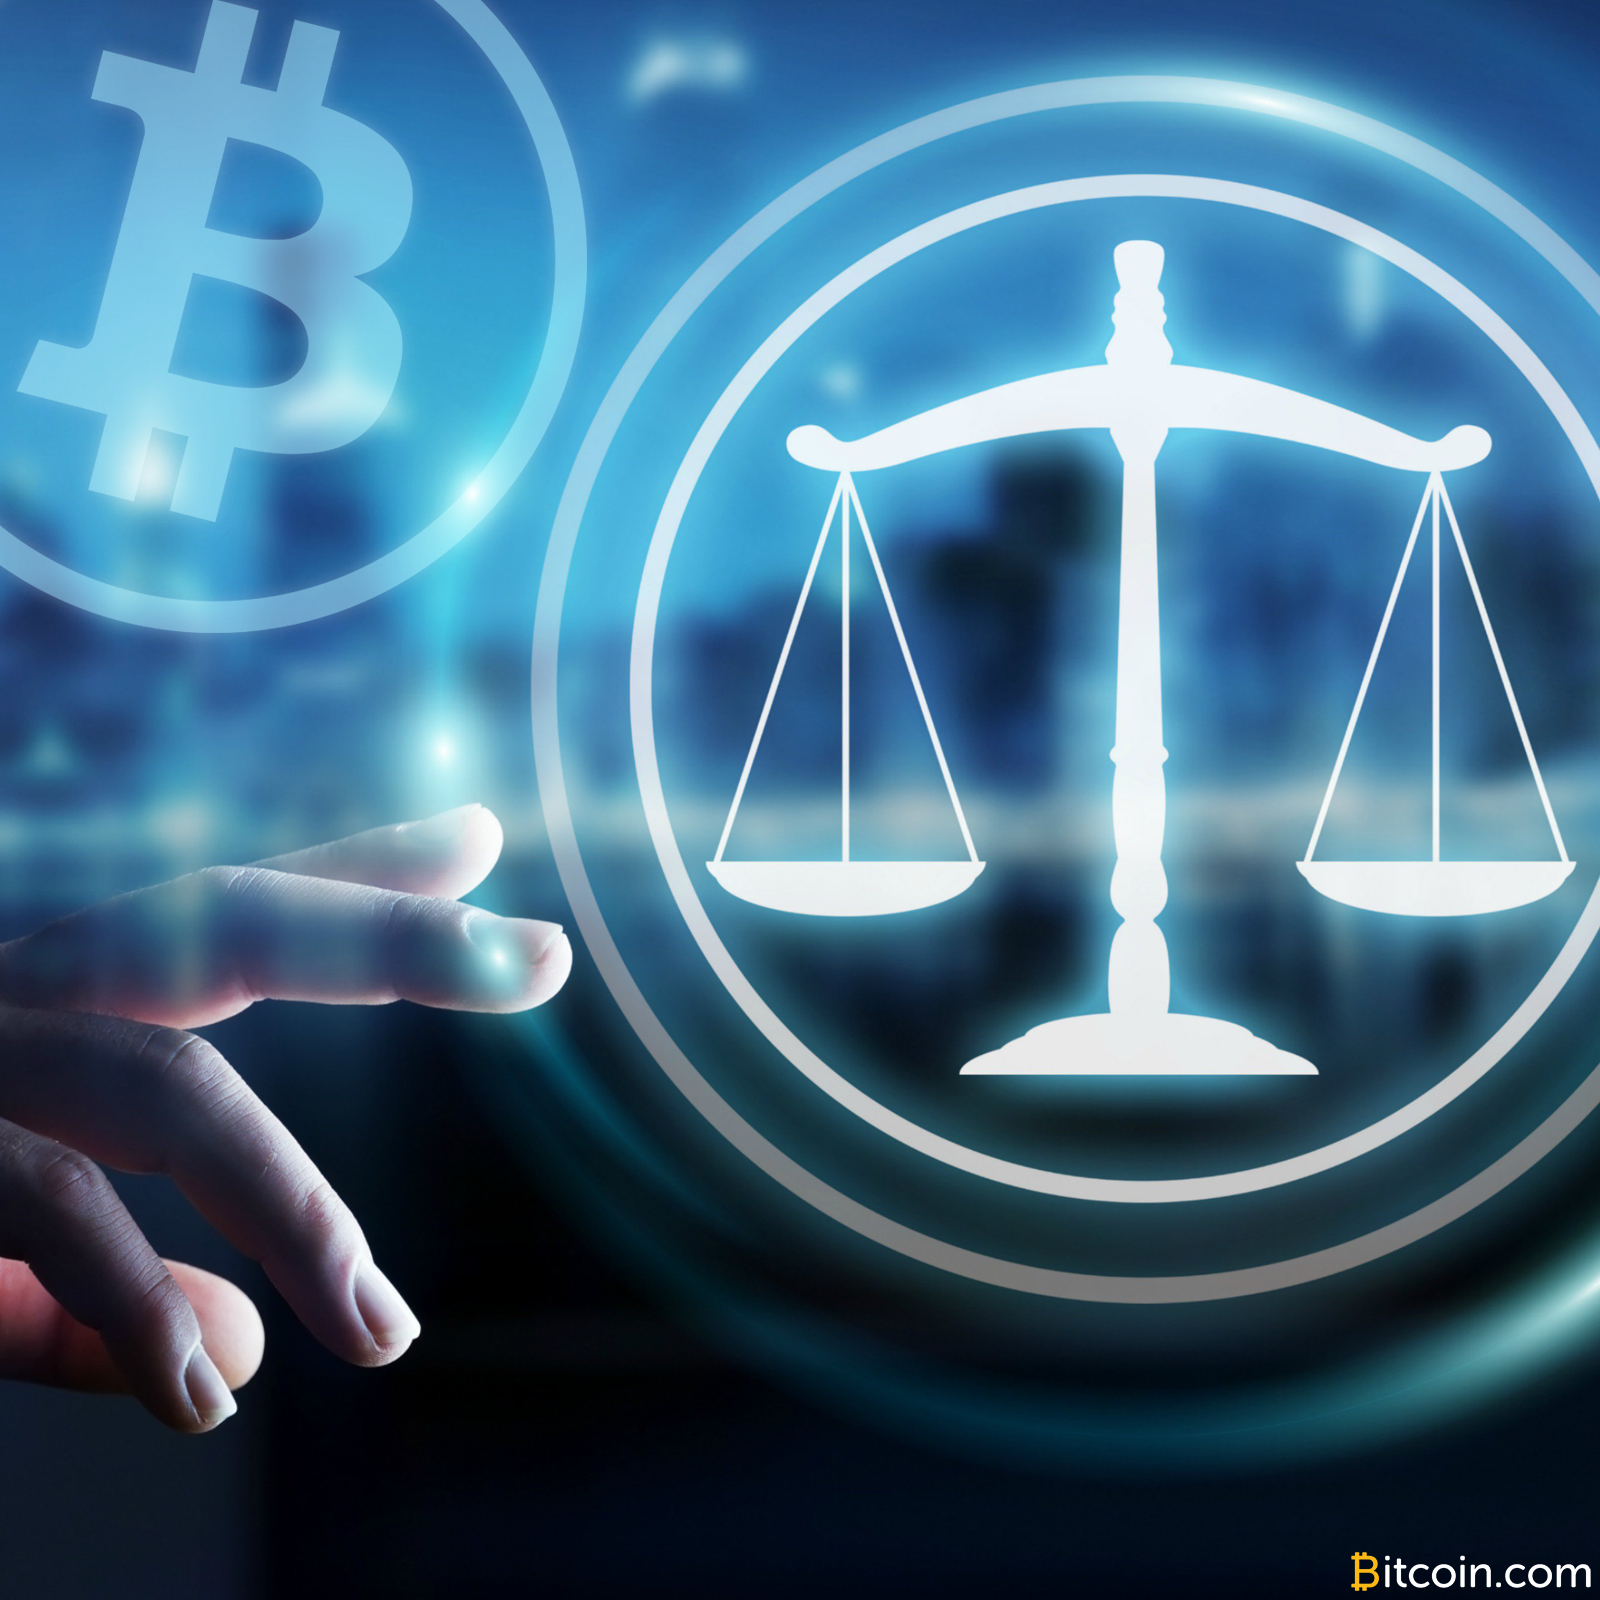 New Hampshire's Bill to Deregulate Bitcoin Effective Next Week